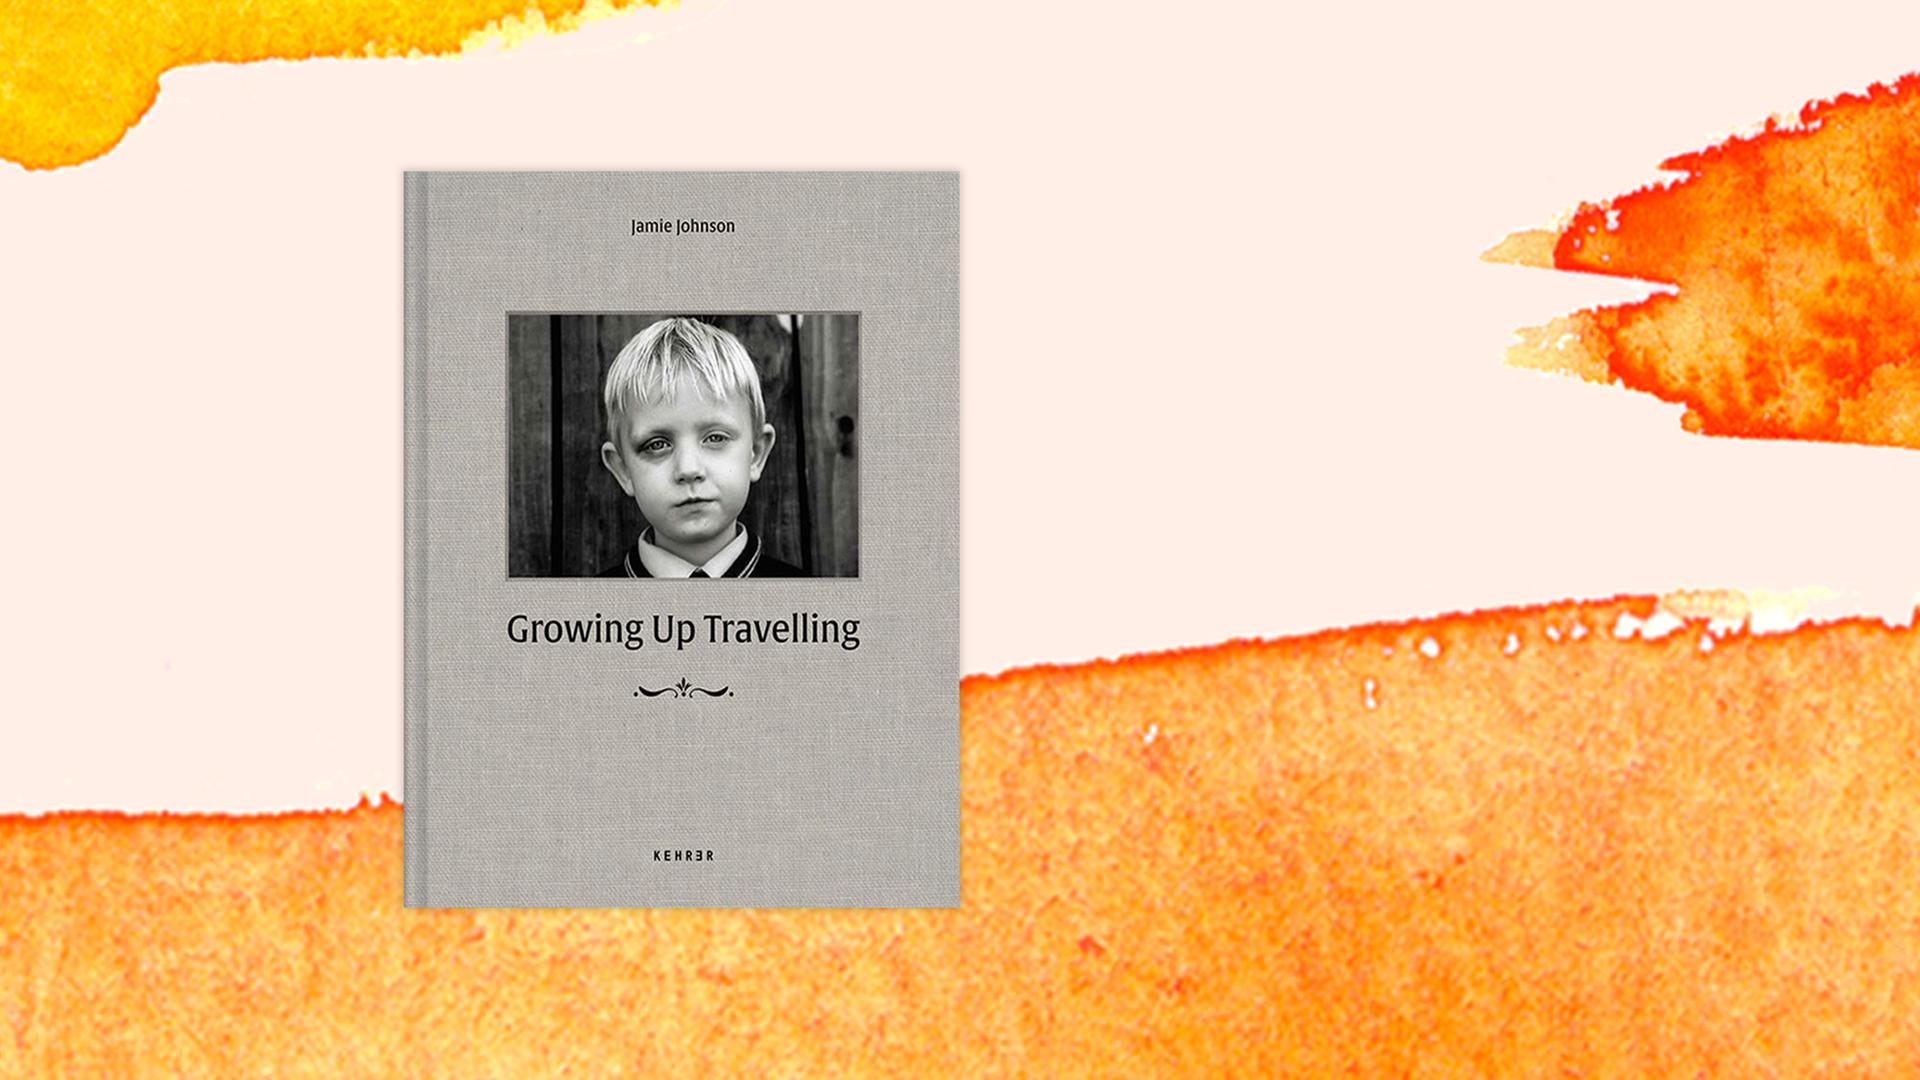 Das Porträt eines Kindes schaut dem Leser auf dem Cover des Buches "Growing Up Travelling" entgegen.